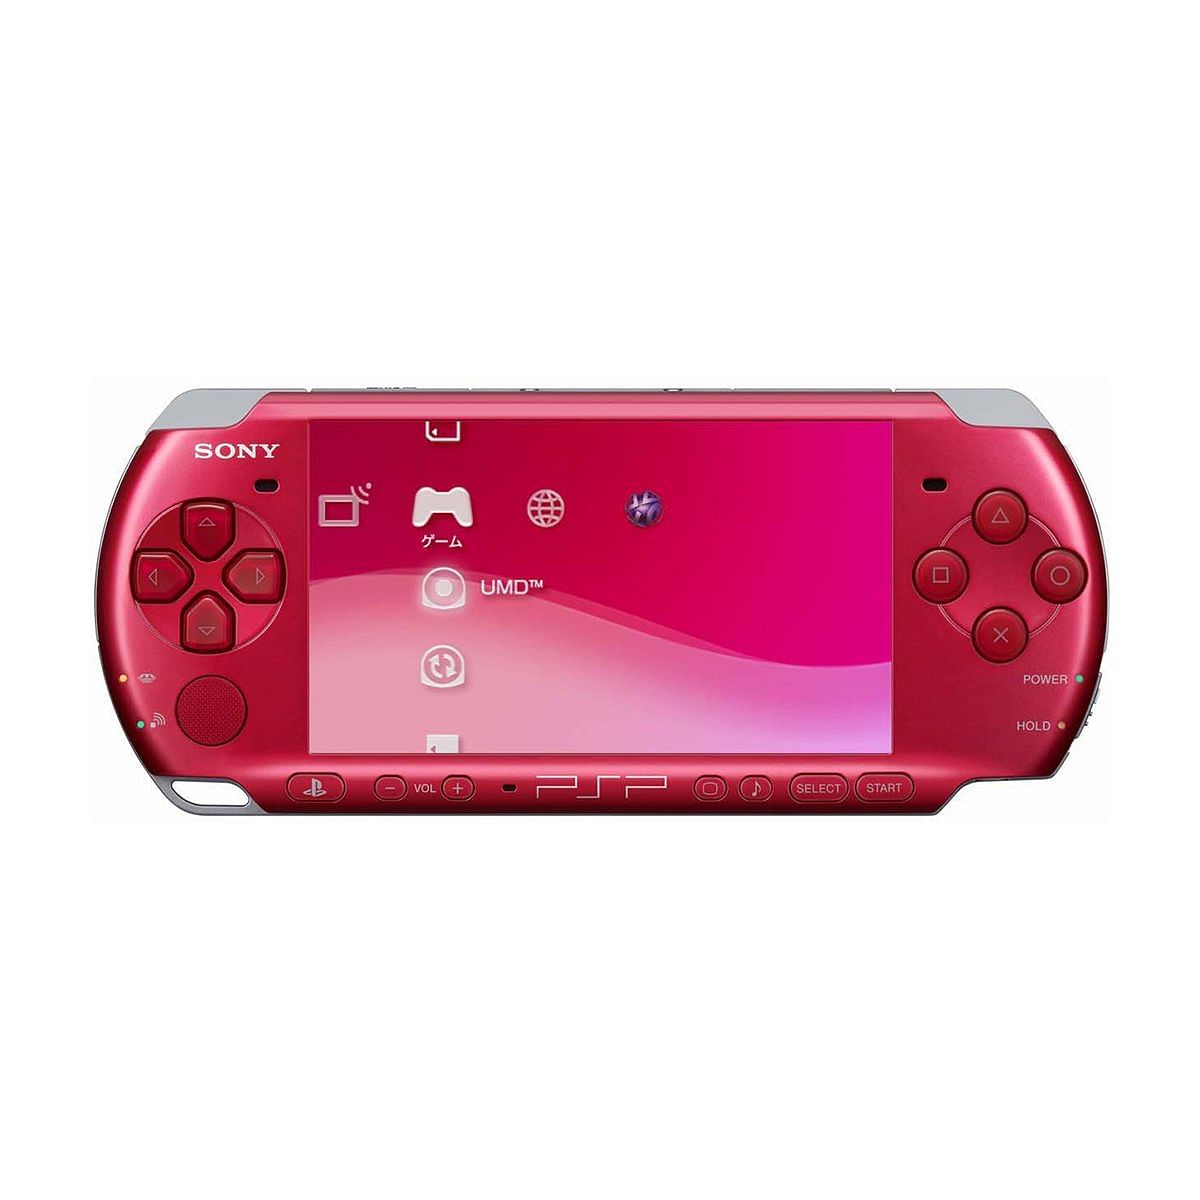 PSP 3006 - Playstation Portable 3006 Handheld - Red